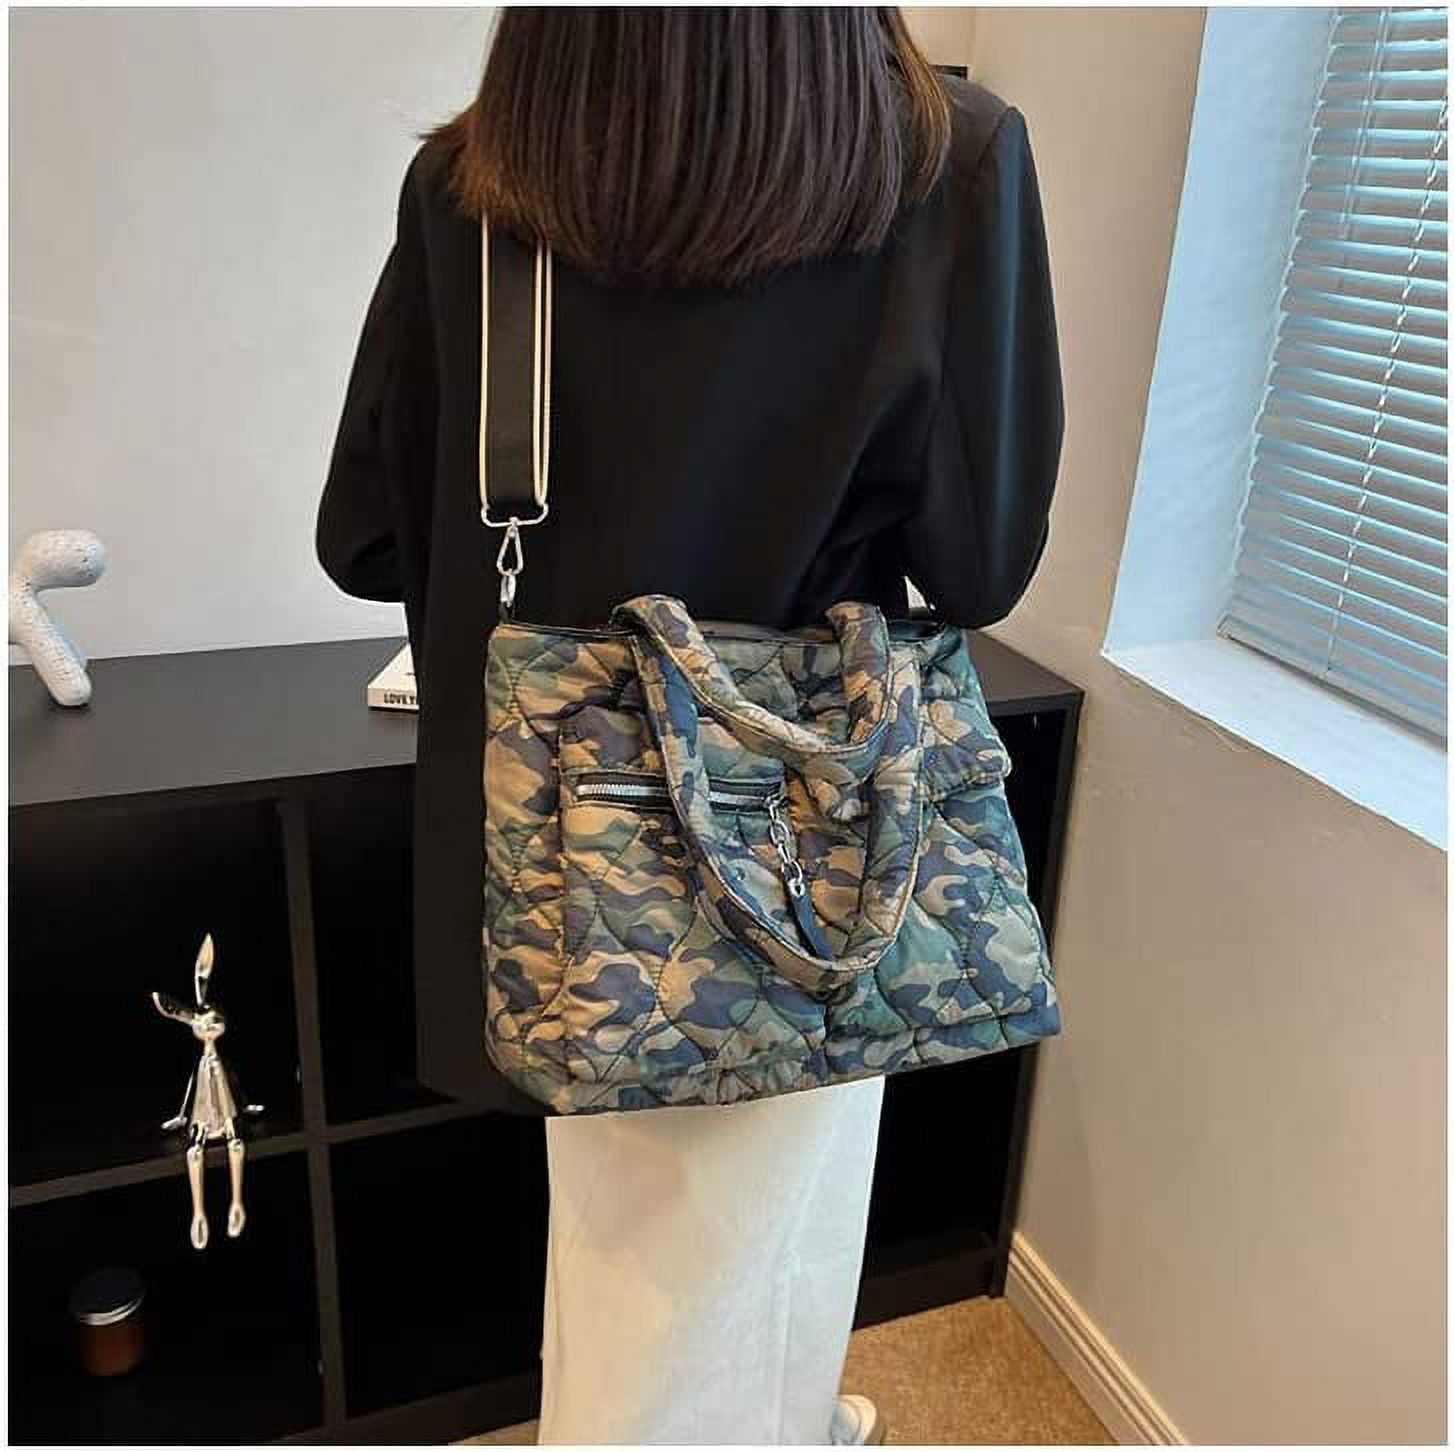 PIKADINGNIS Puffer Shoulder Bag for Women Large Capacity 